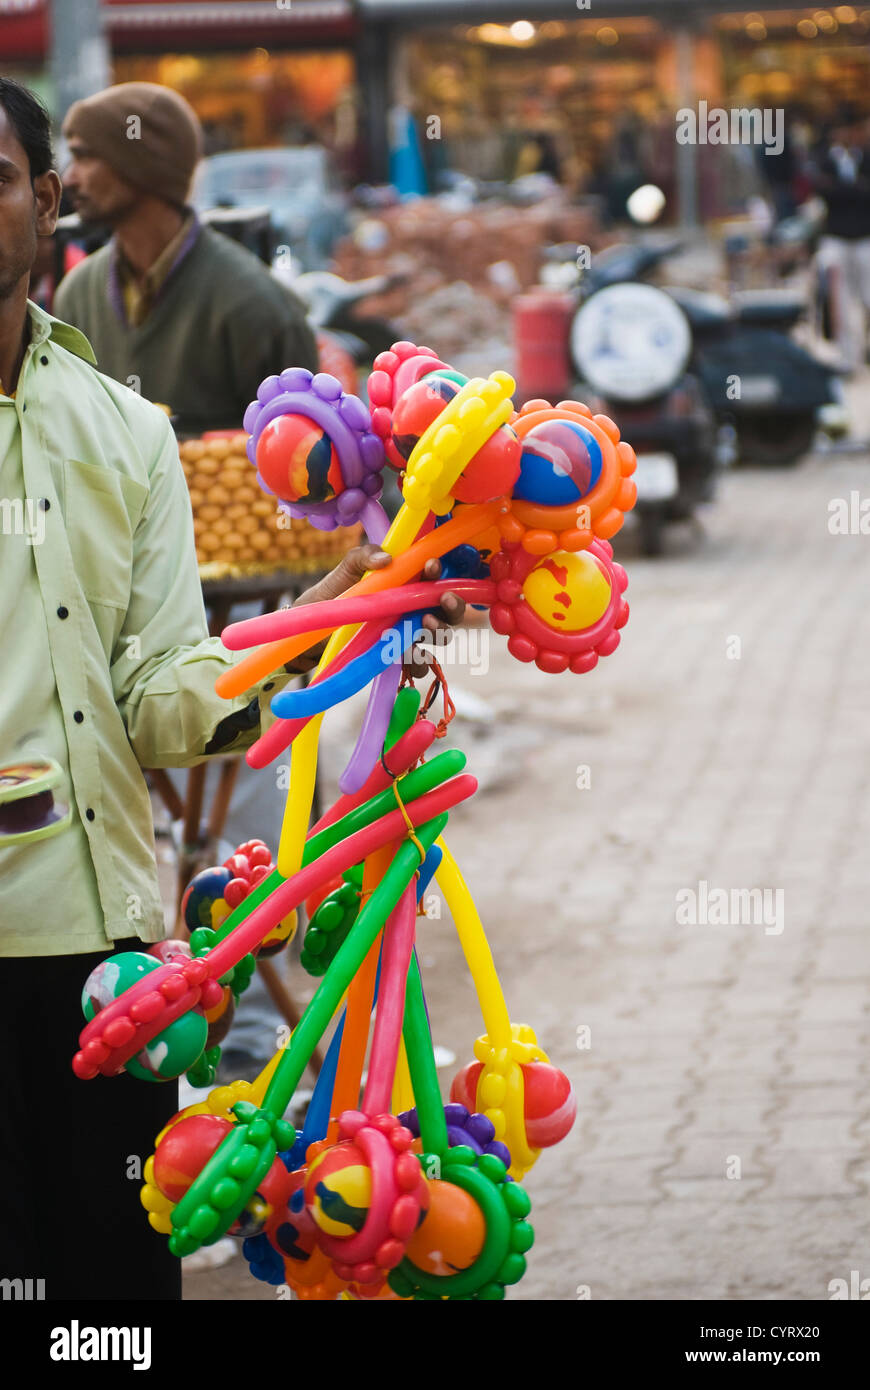 Vendor selling toys in a street market, New Delhi, India Stock Photo